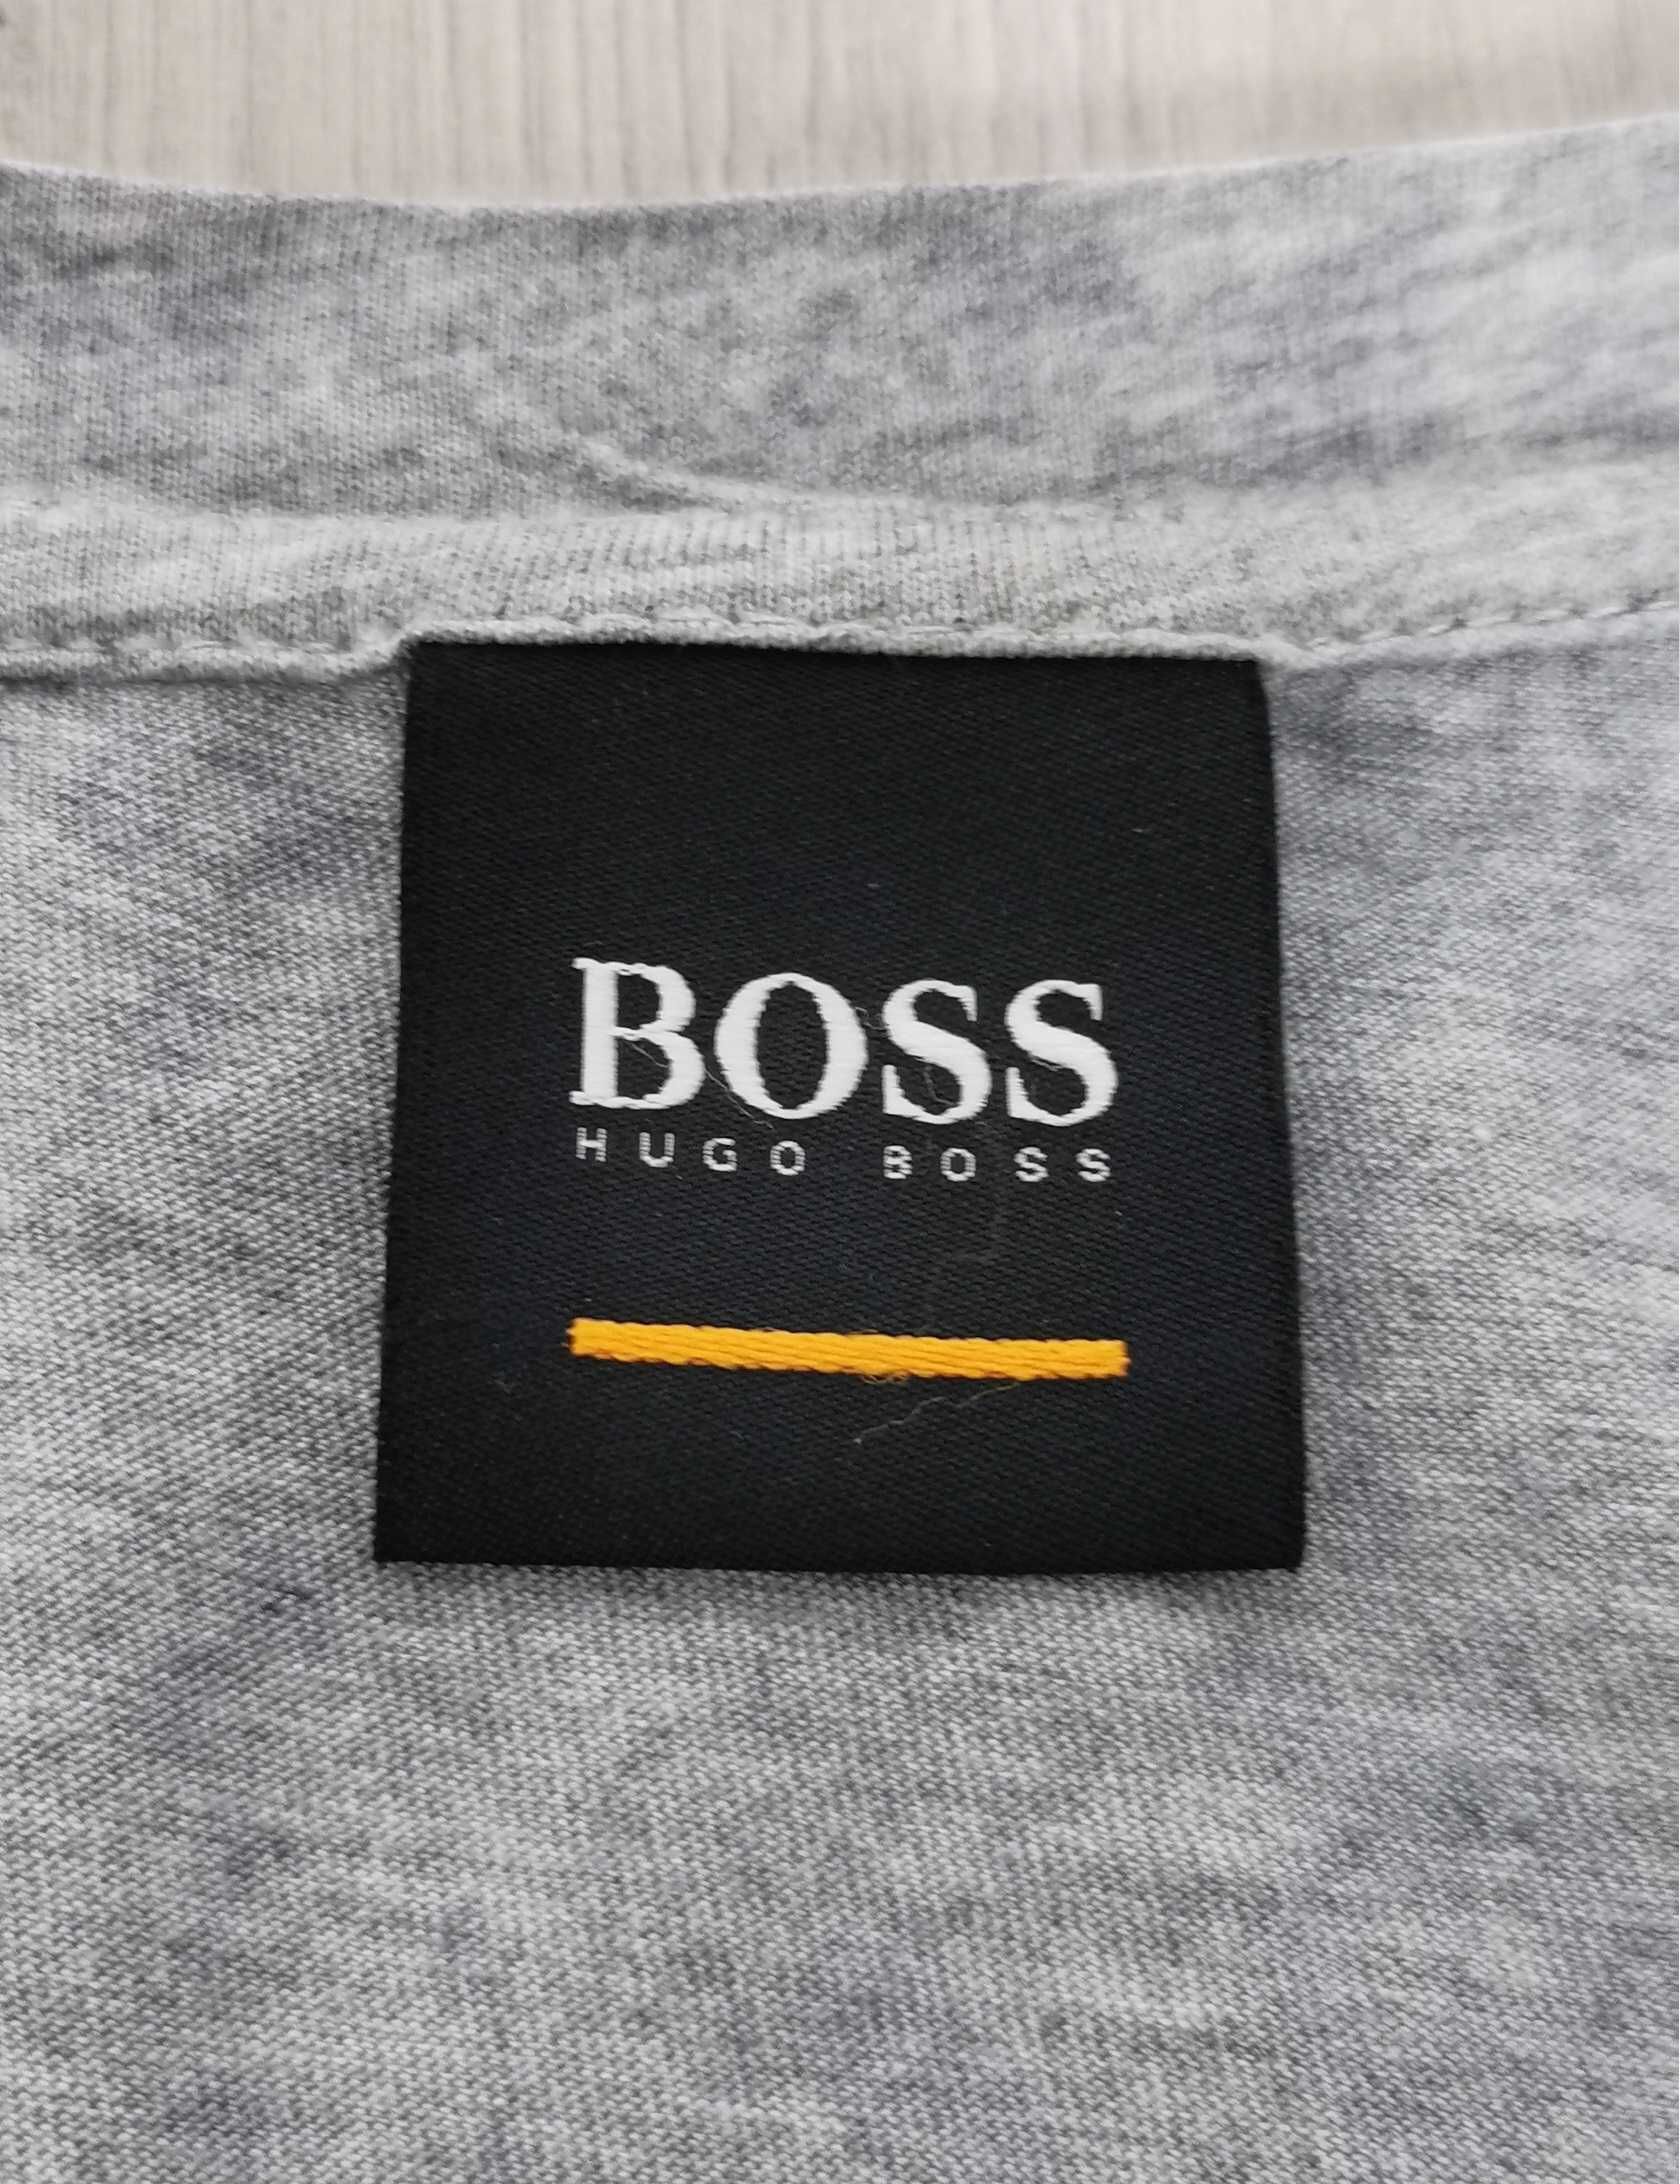 T-shirt Hugo Boss duży nadruk boat big print rozmiar M/L szary grey